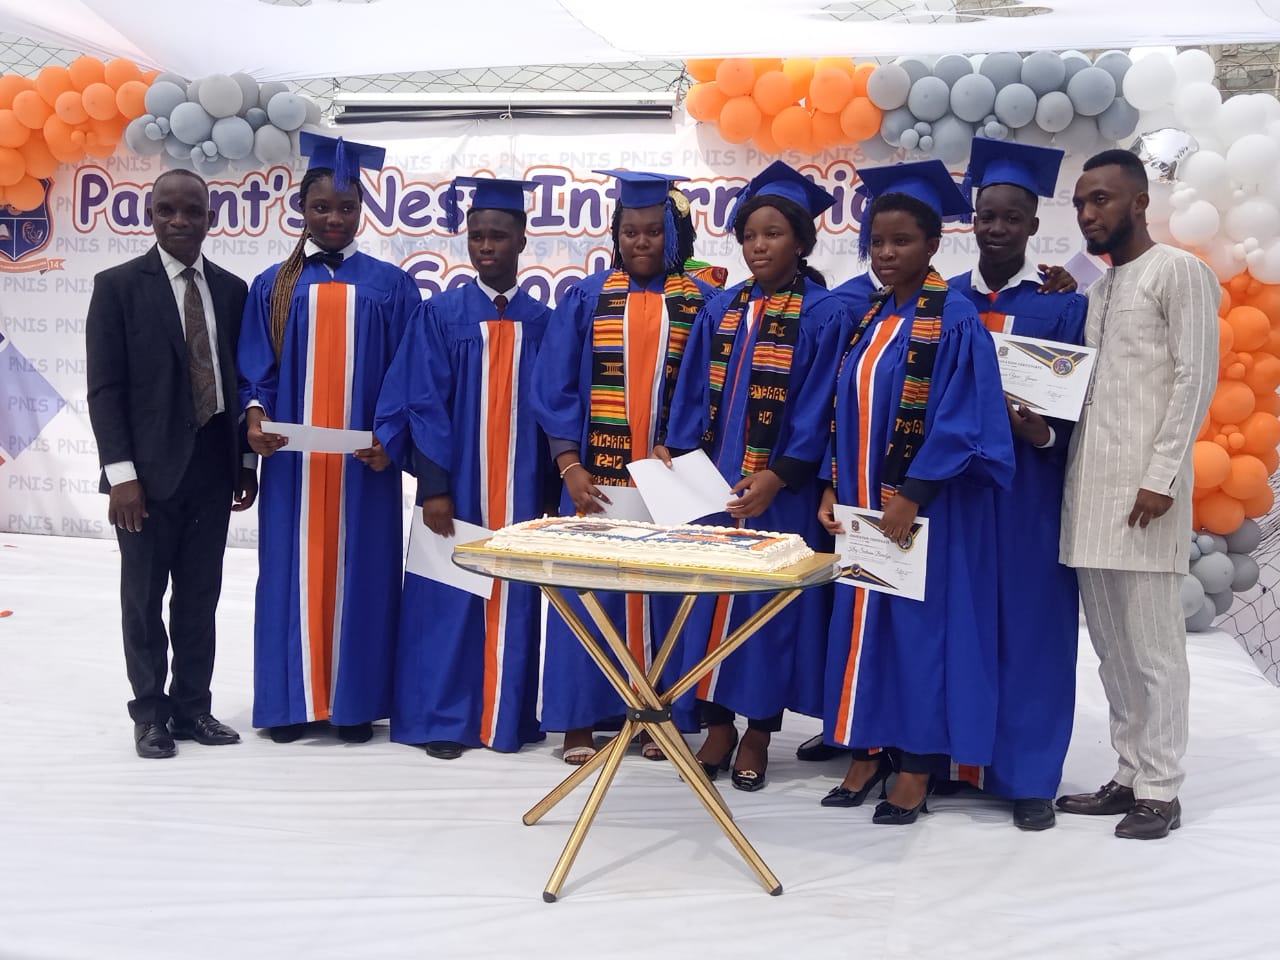 Parent’s Nest International School holds Graduation